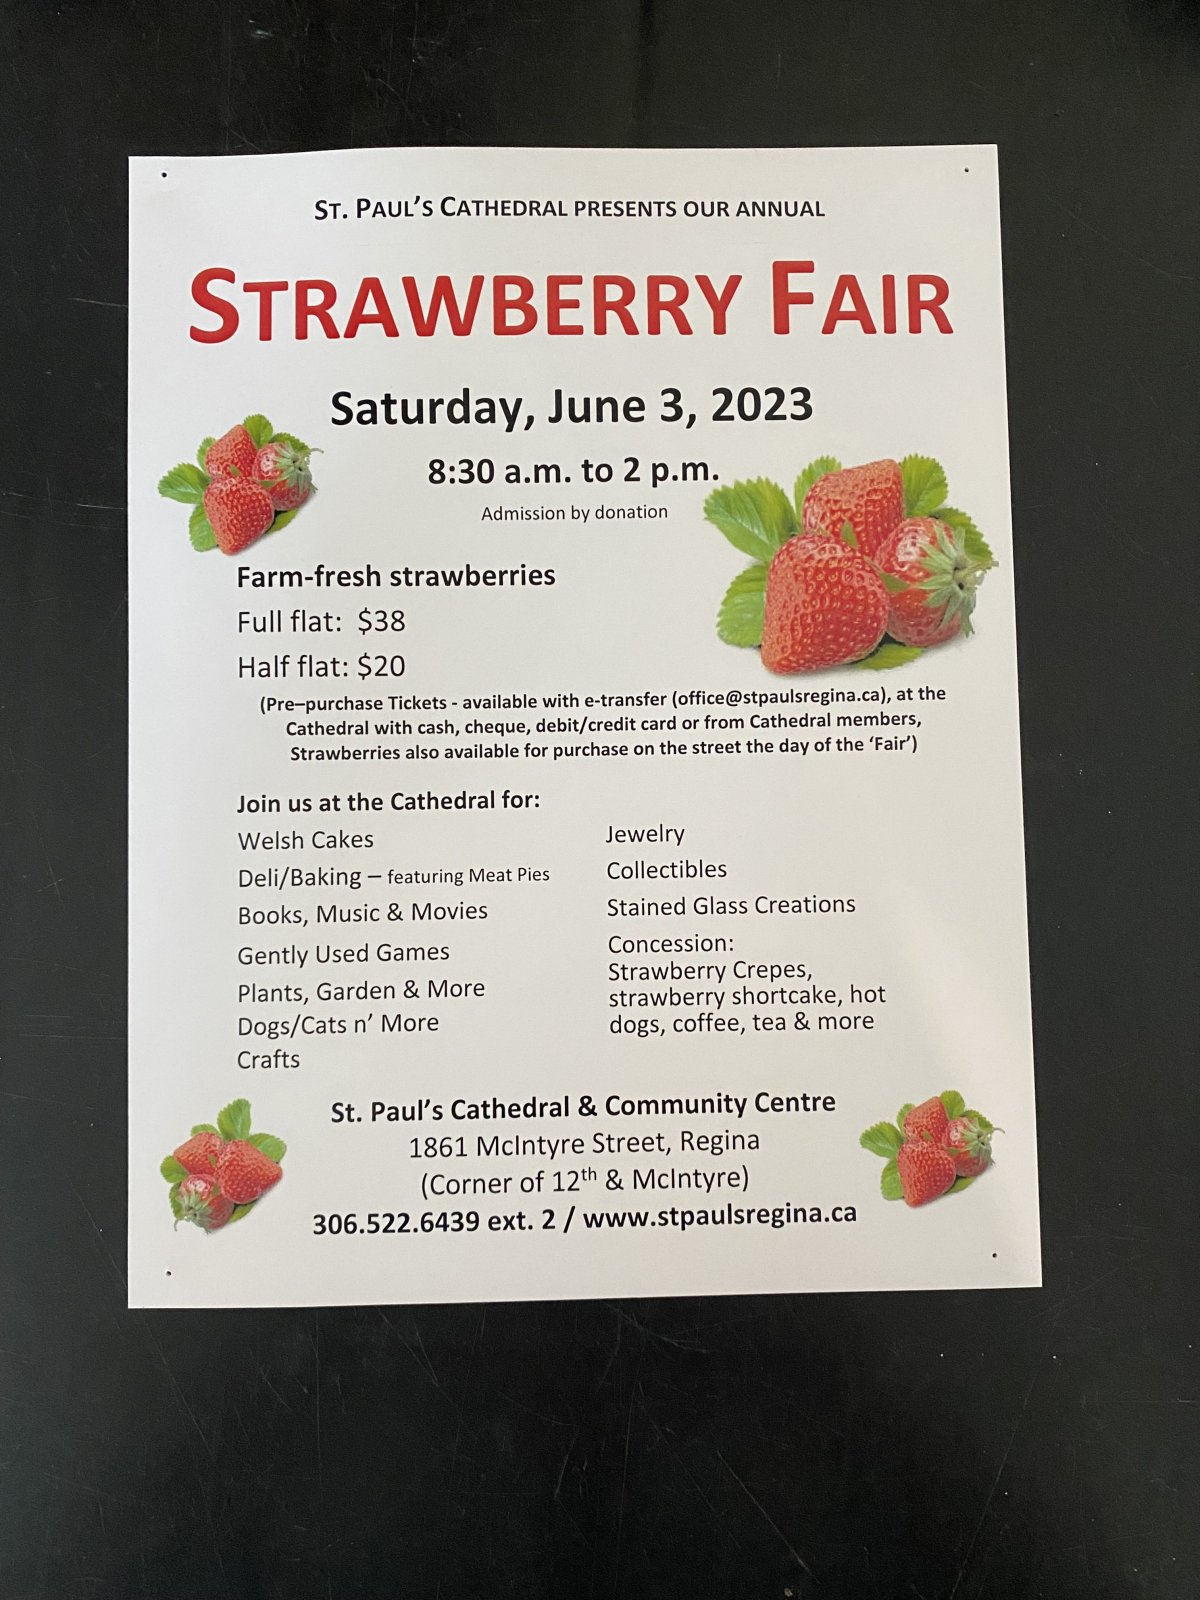 Strawberry Fair - image